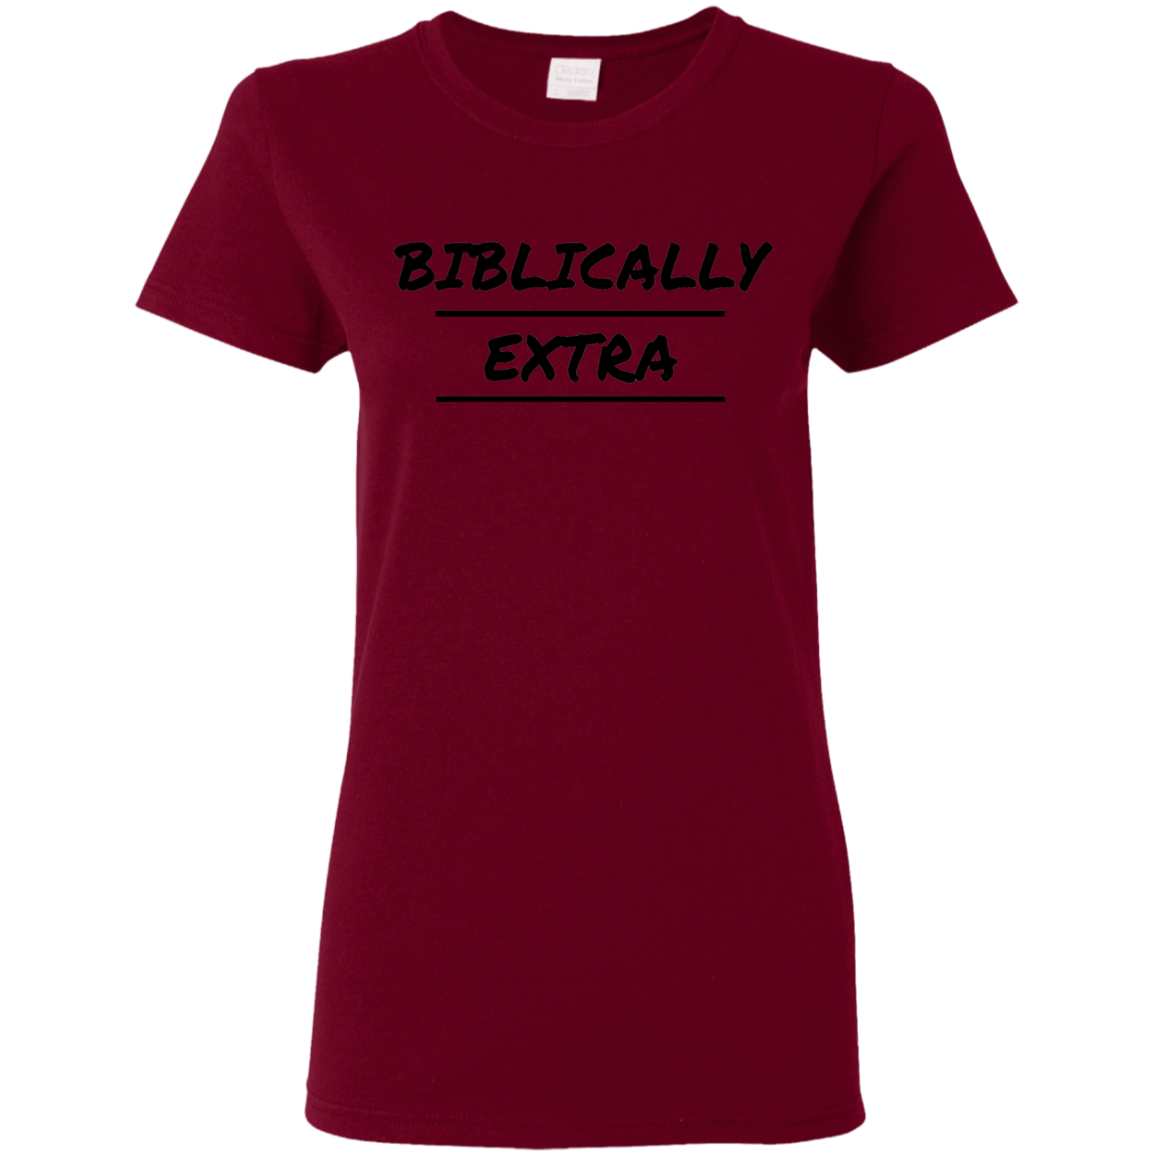 Biblically Extra Ladies' T-Shirt